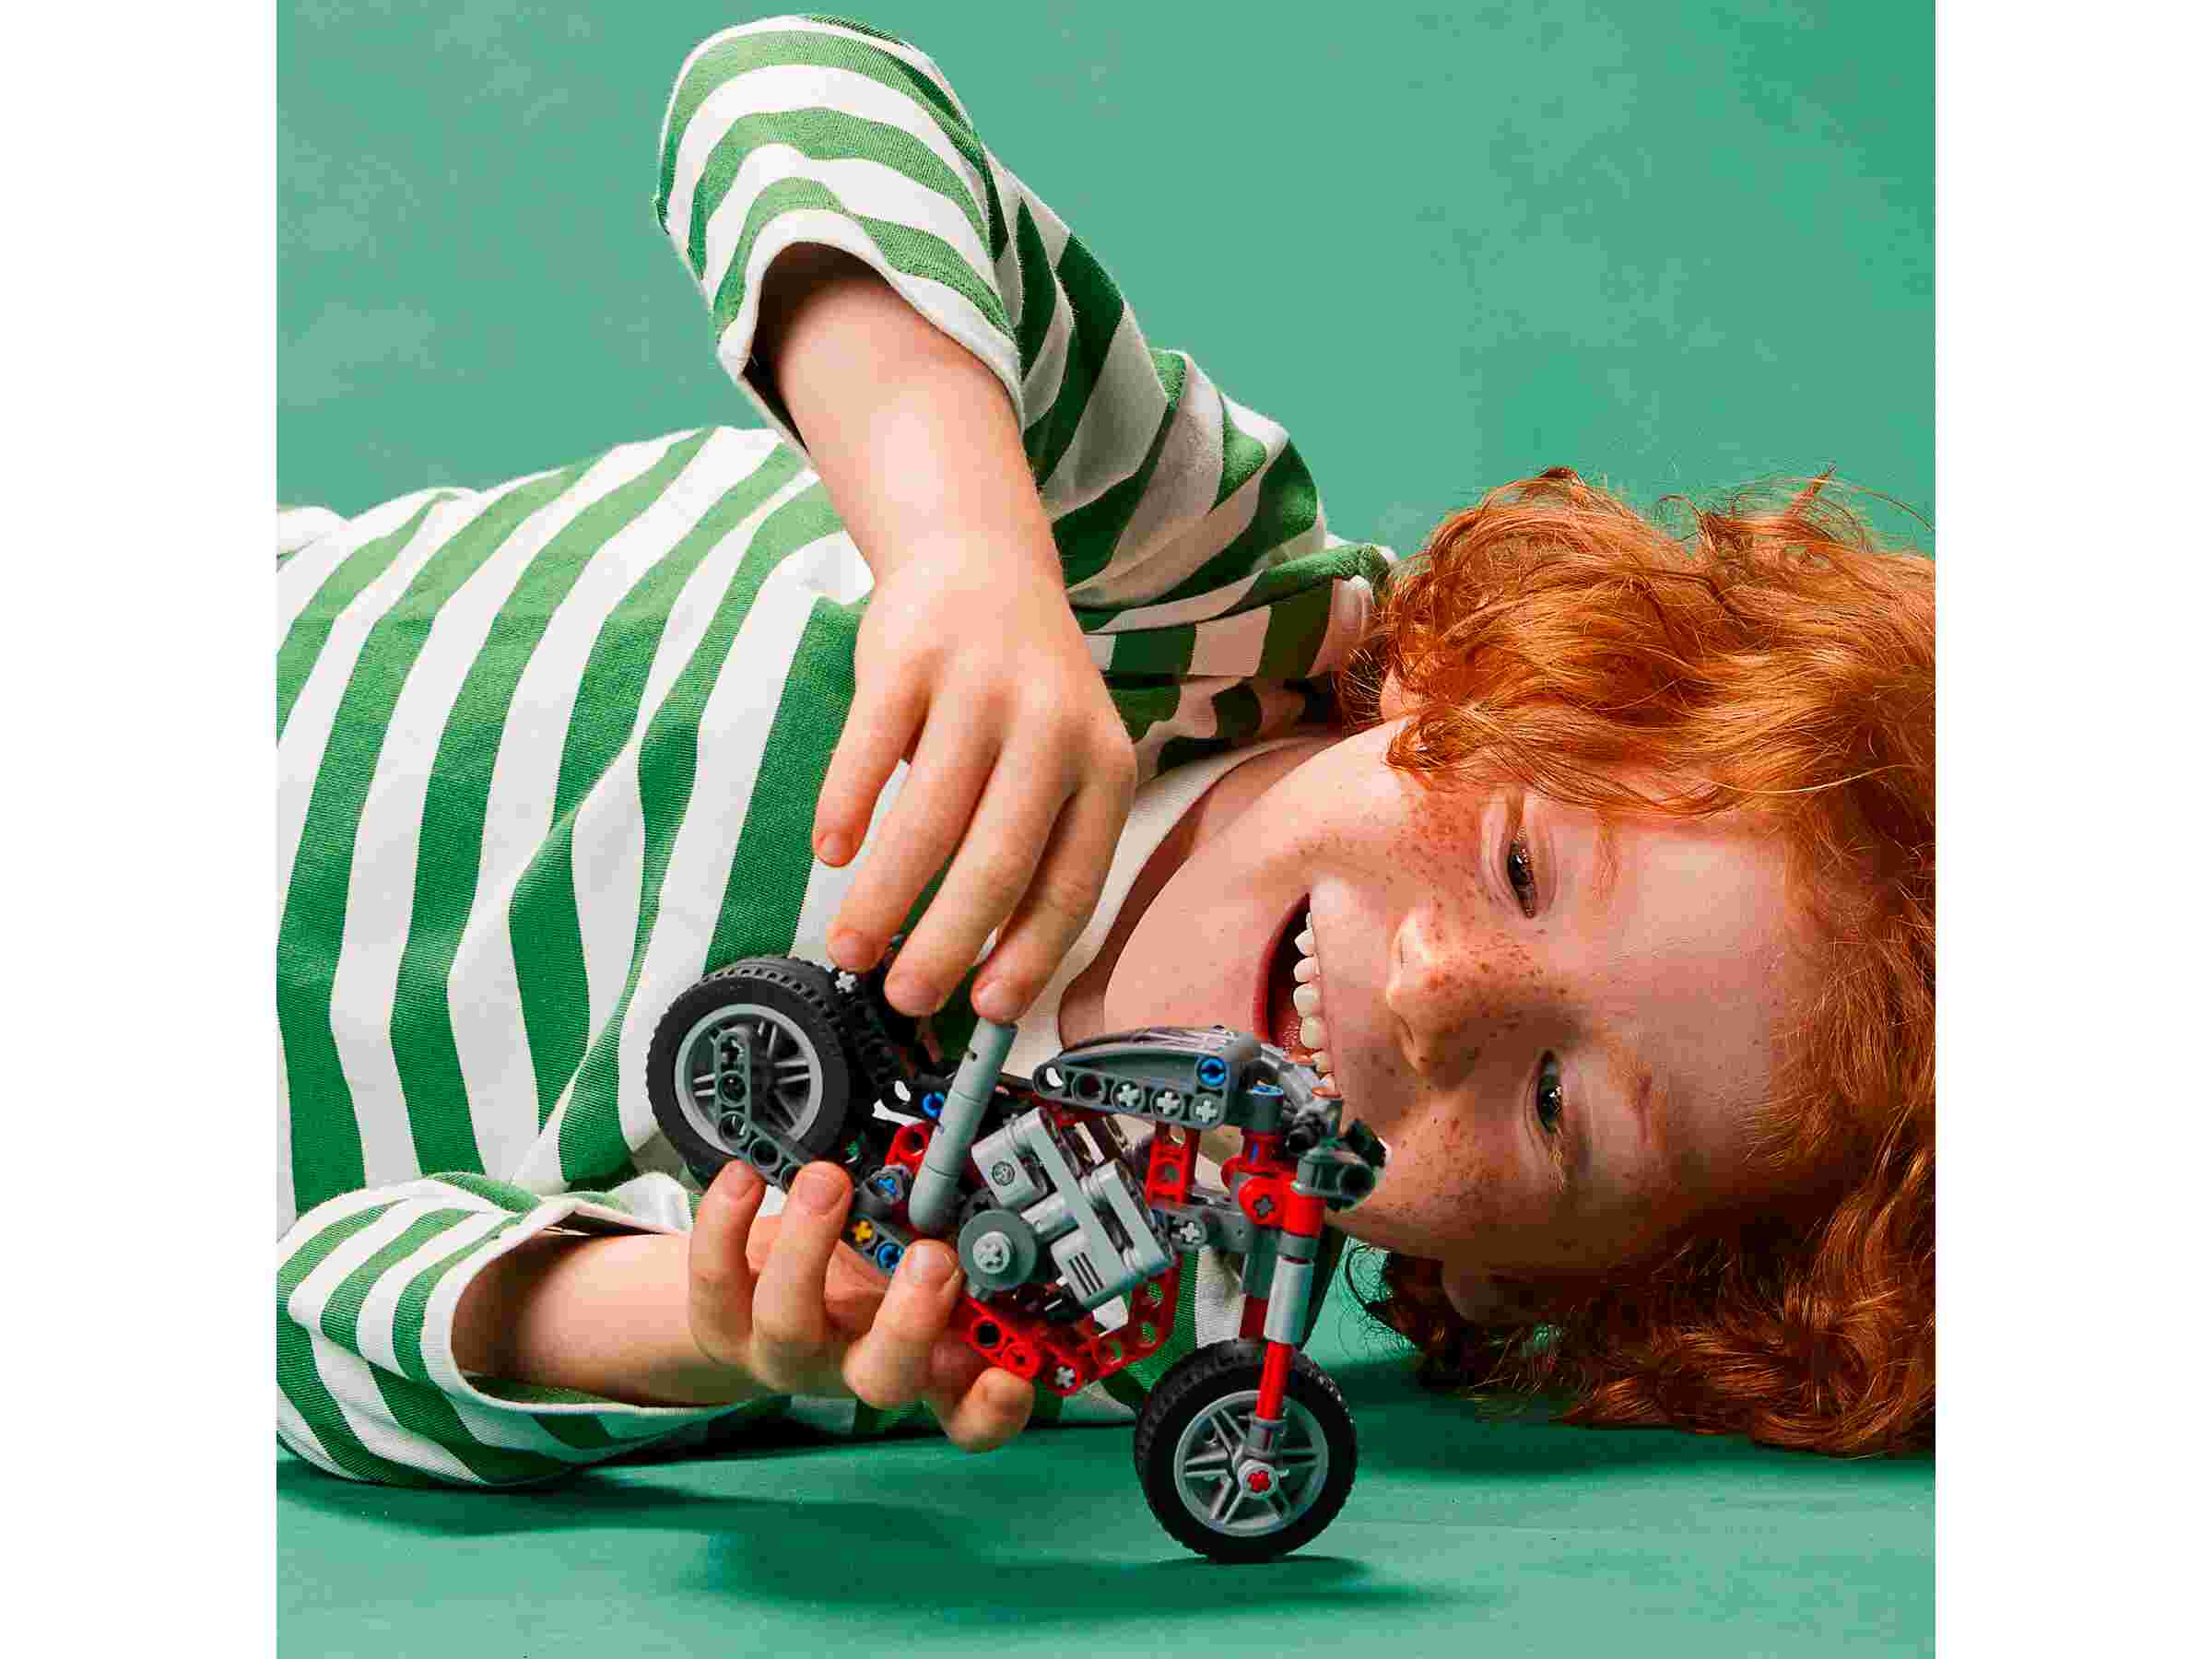 LEGO 42132 Technic Chopper Abenteuer-Bike, 2-in-1 Bausatz, Motorrad-Spielzeug